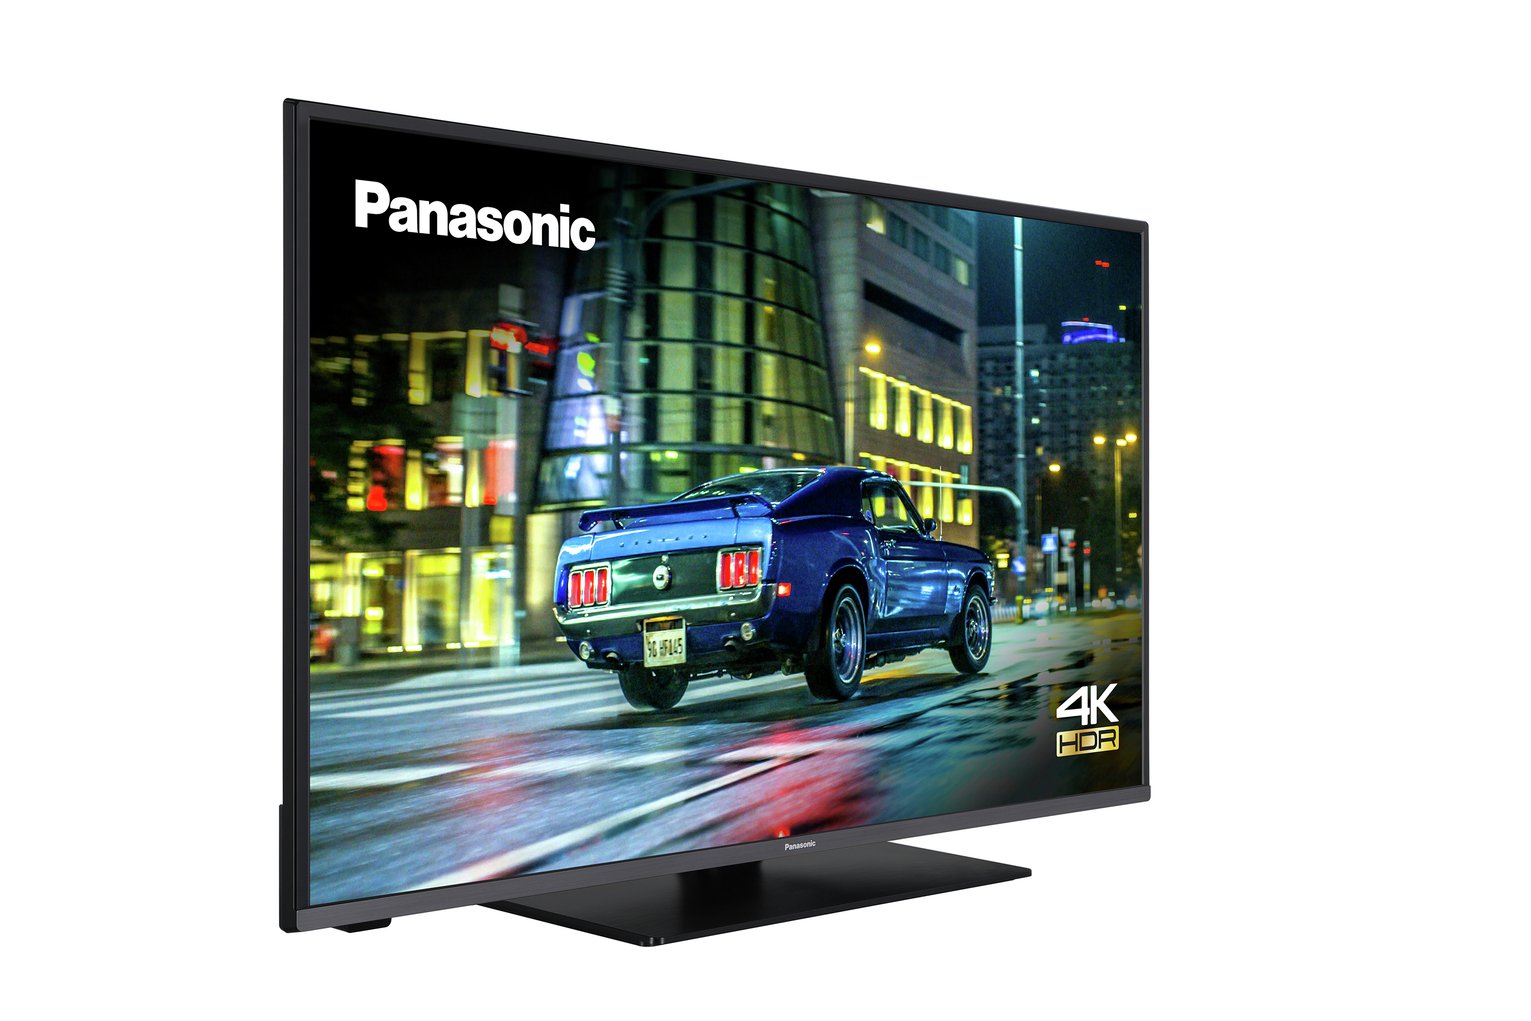 Panasonic 43 Inch TX-43HX580B Smart 4K UHD LED TV with HDR Review